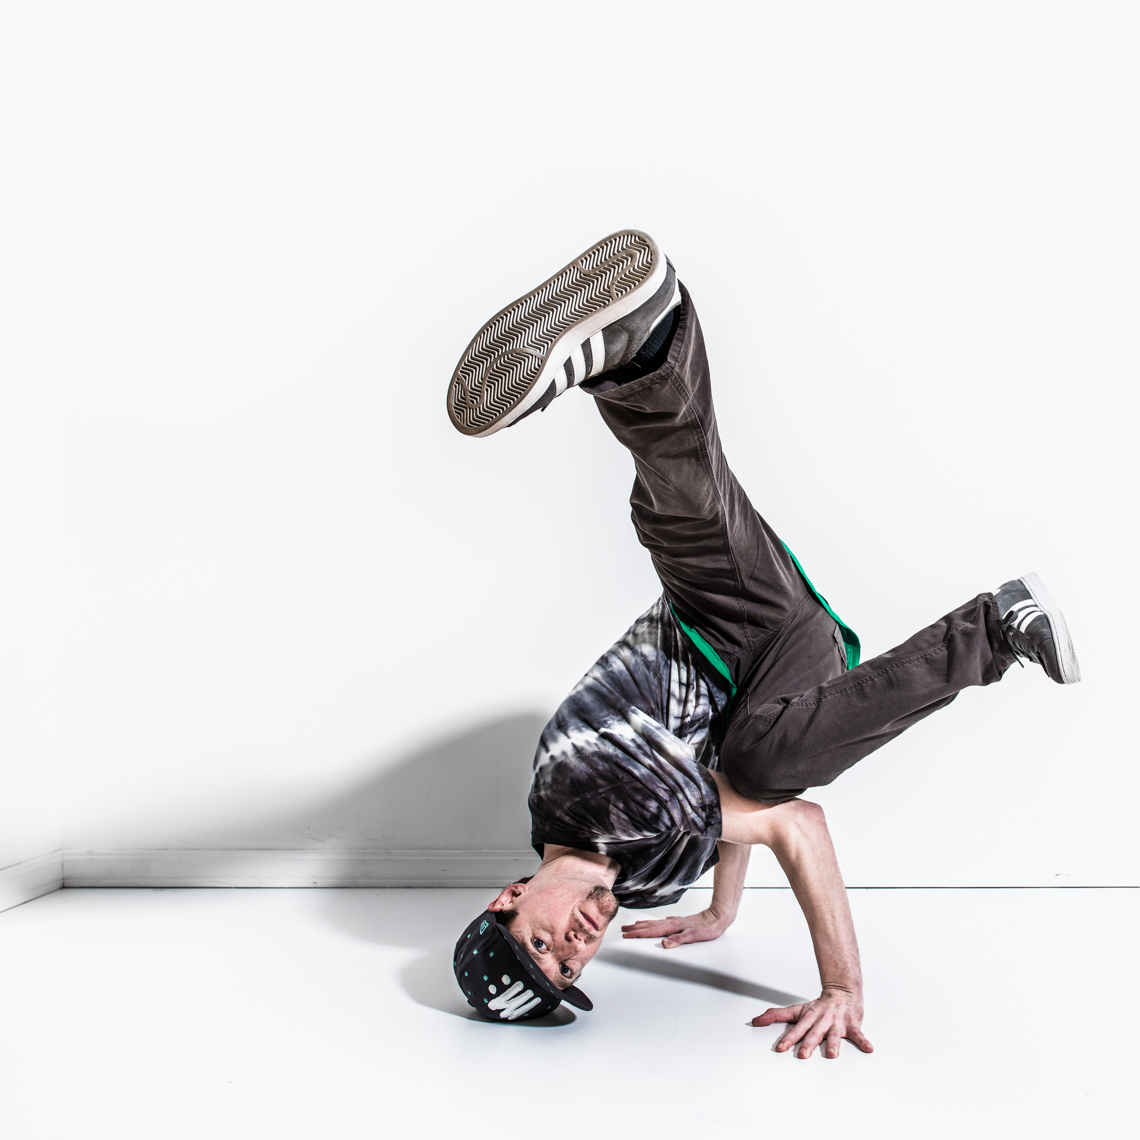 Doug, Breakdancer, Seattle WA, USA